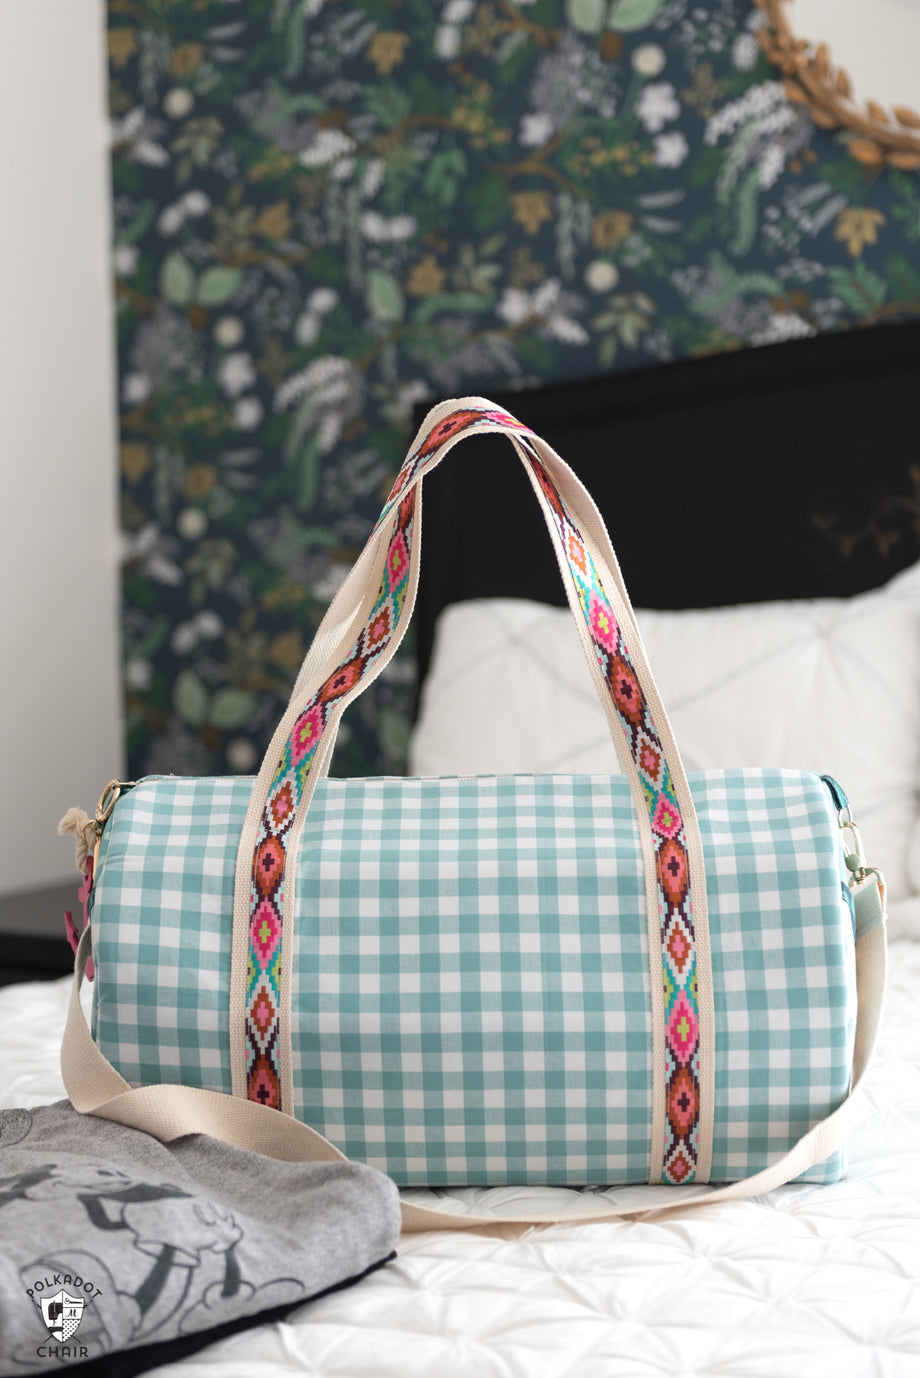 Polka Dot Duffle Bag Pattern